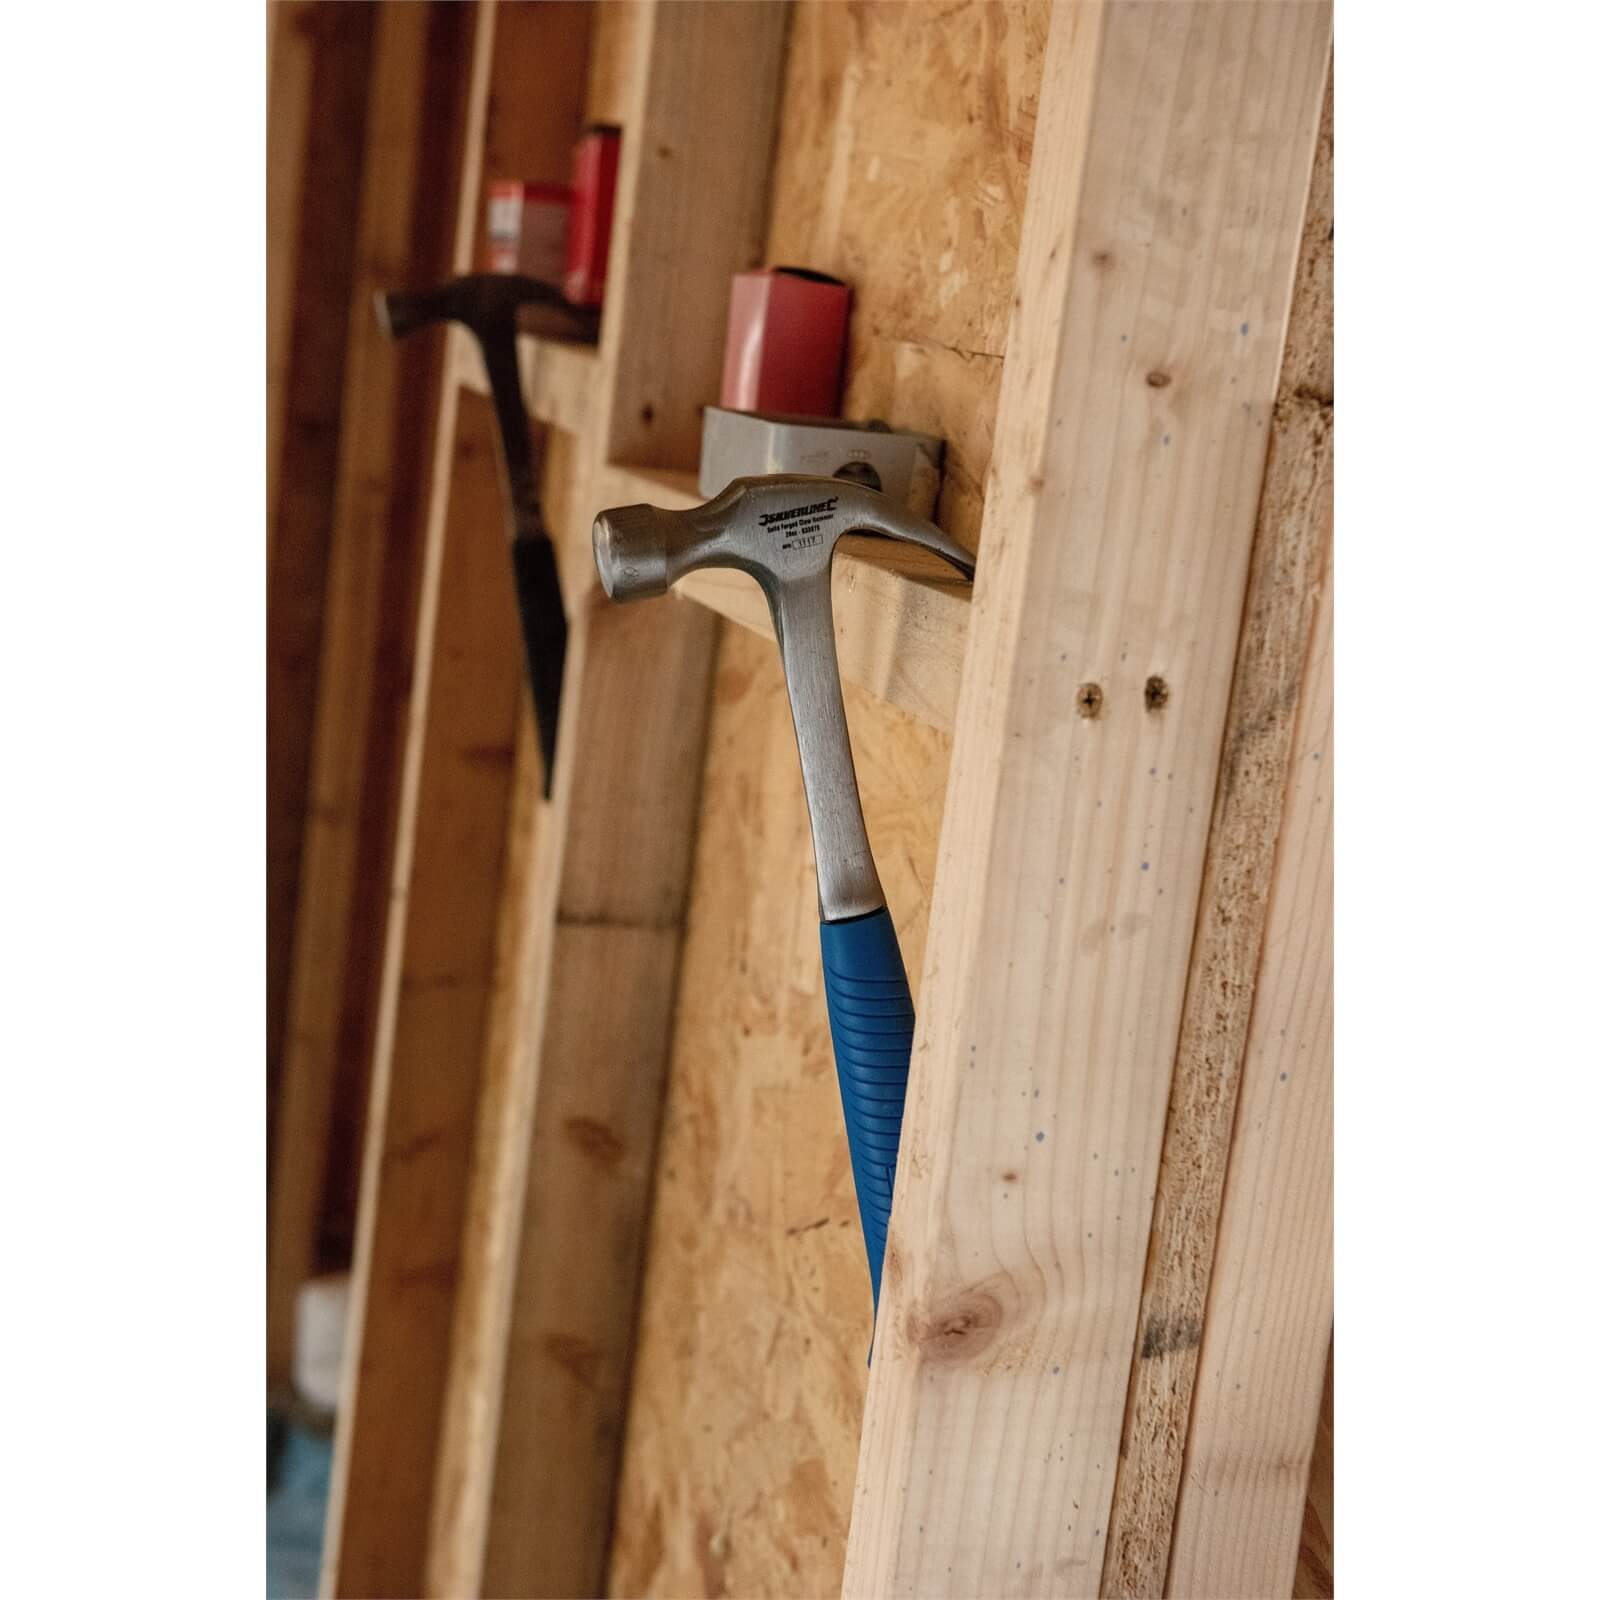 Silverline Solid Forged Claw Hammer - 20oz (567g)